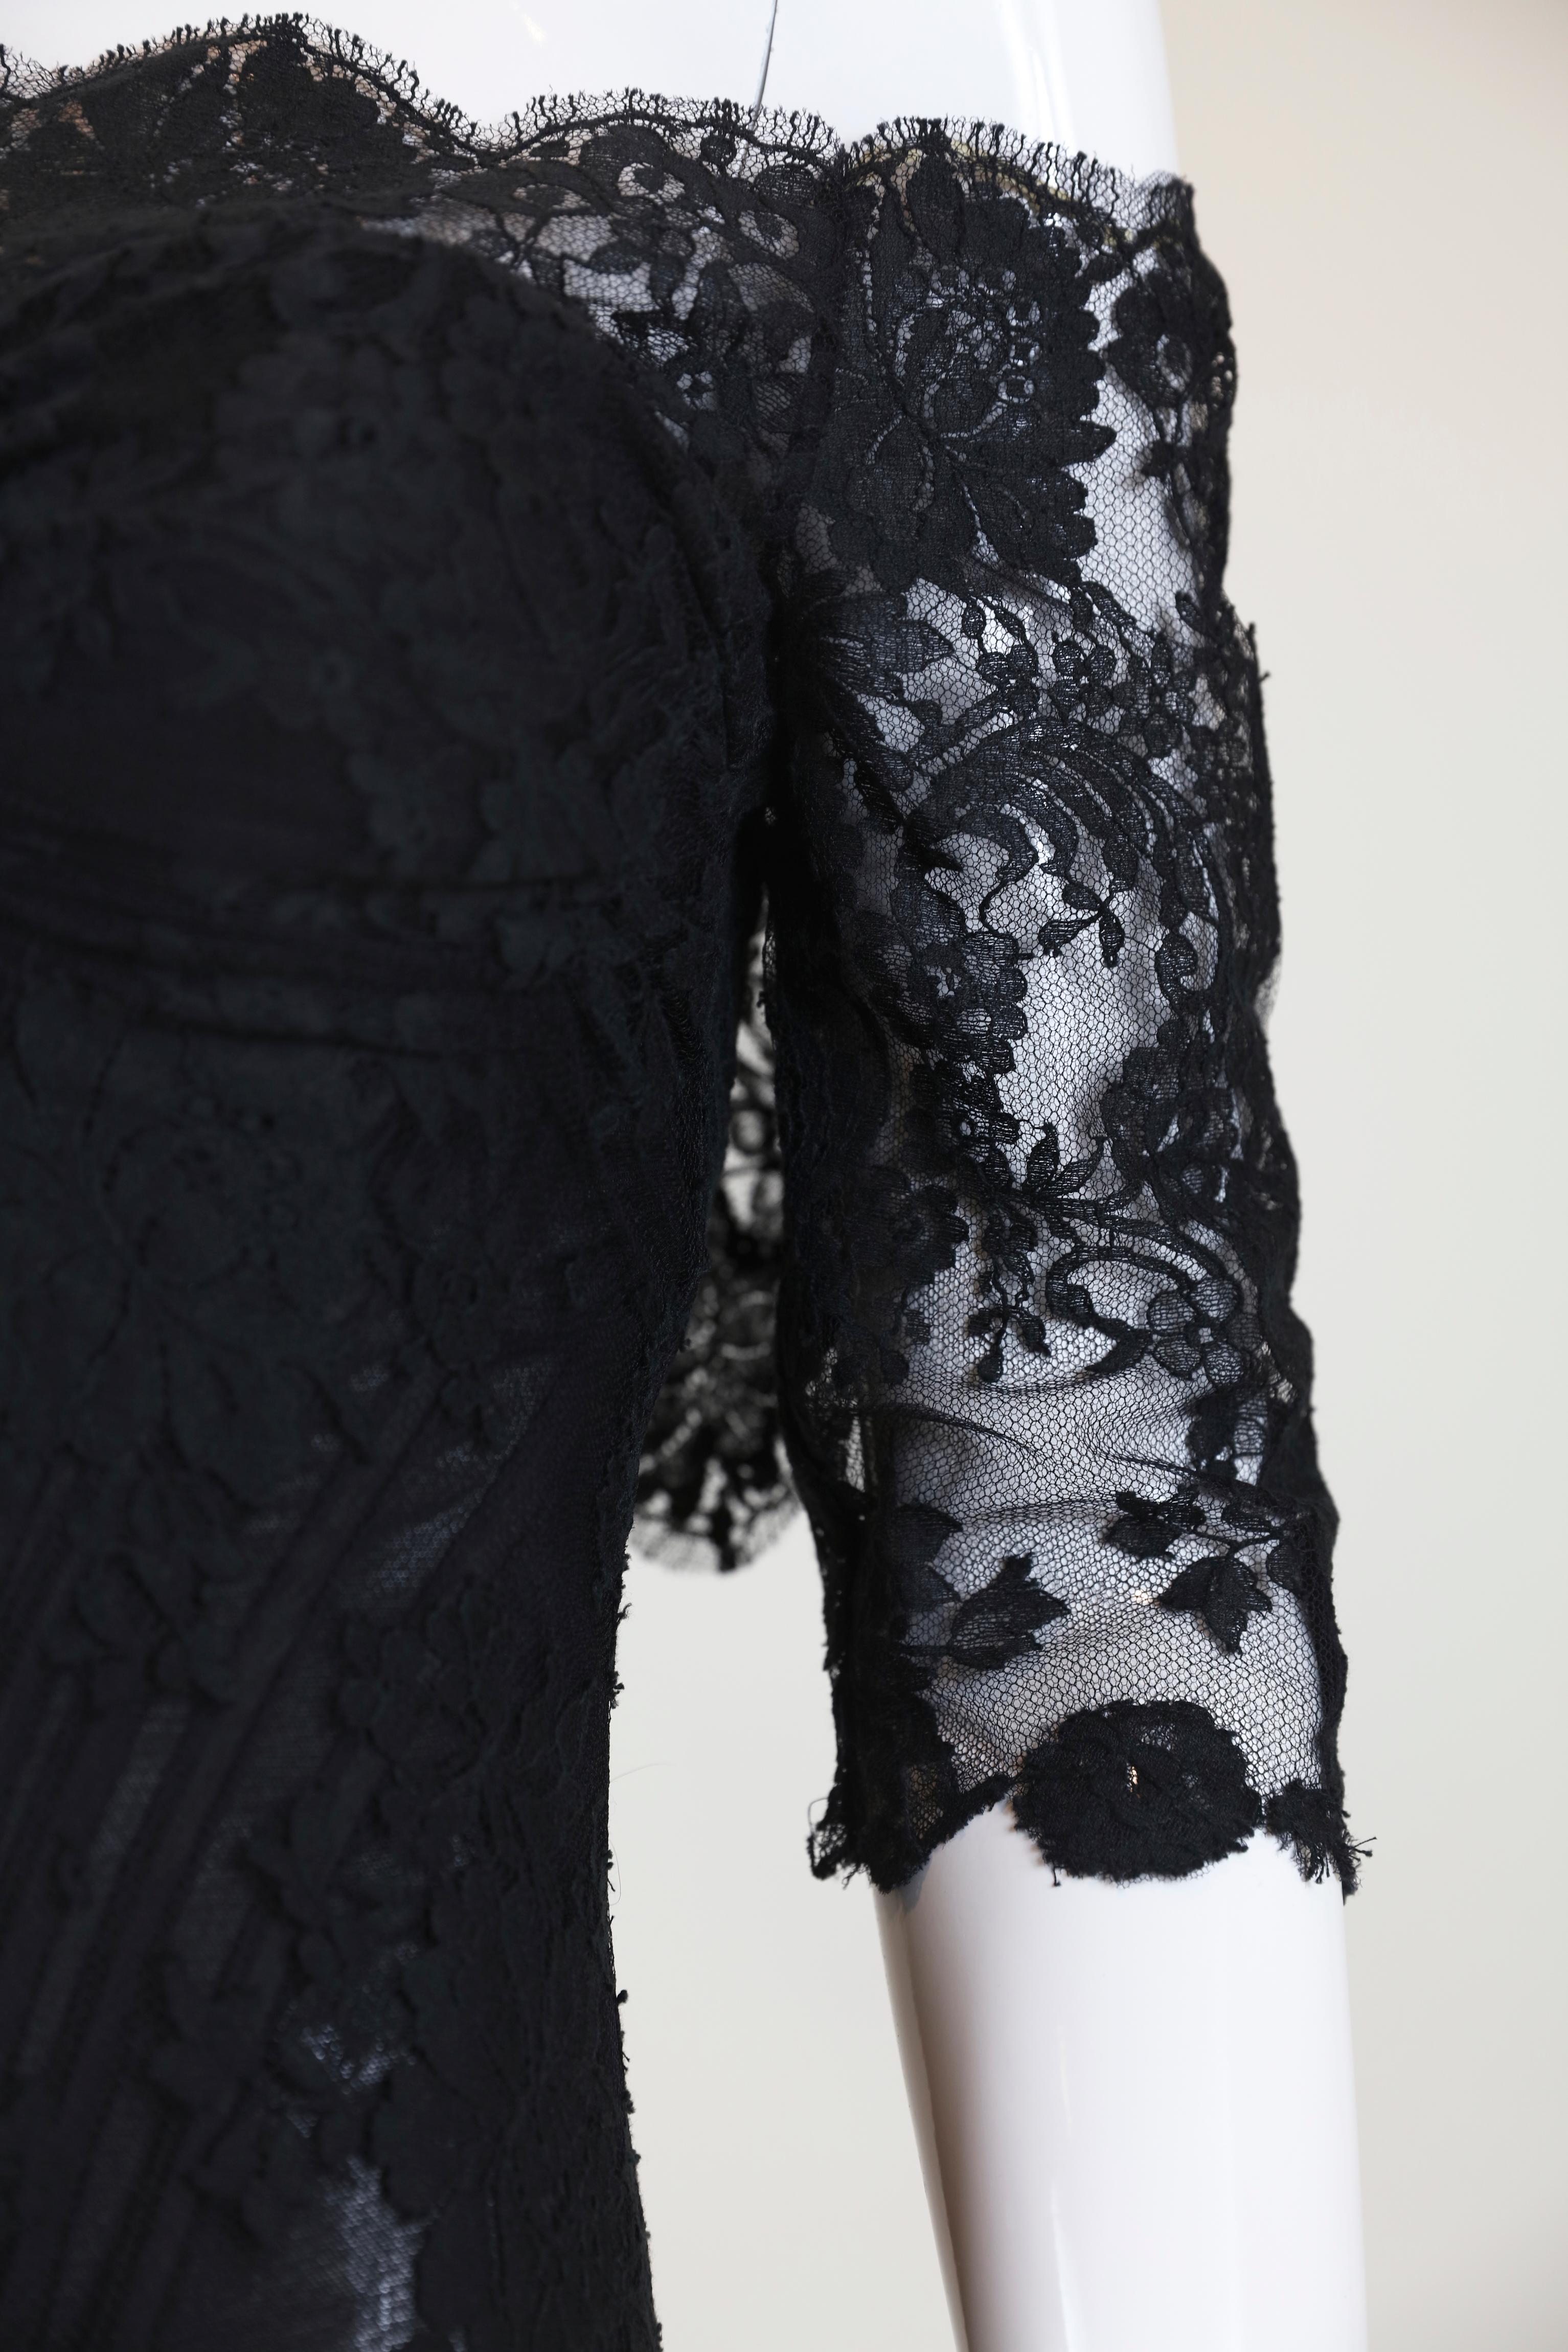 alexander mcqueen black lace dress